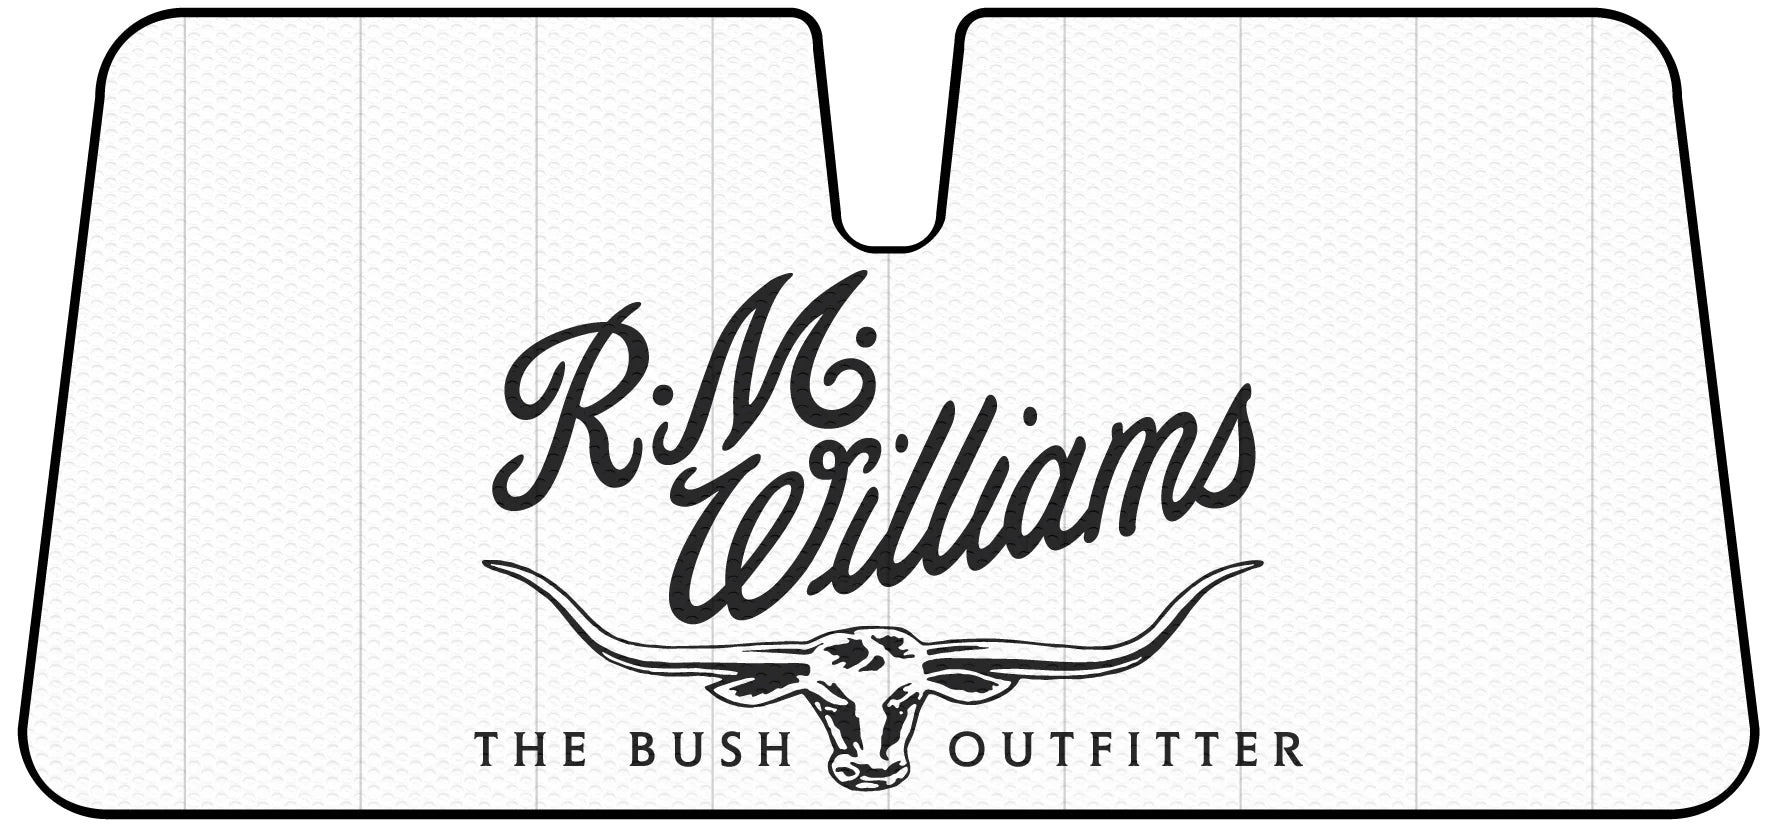 RM Williams Sunshades Logo